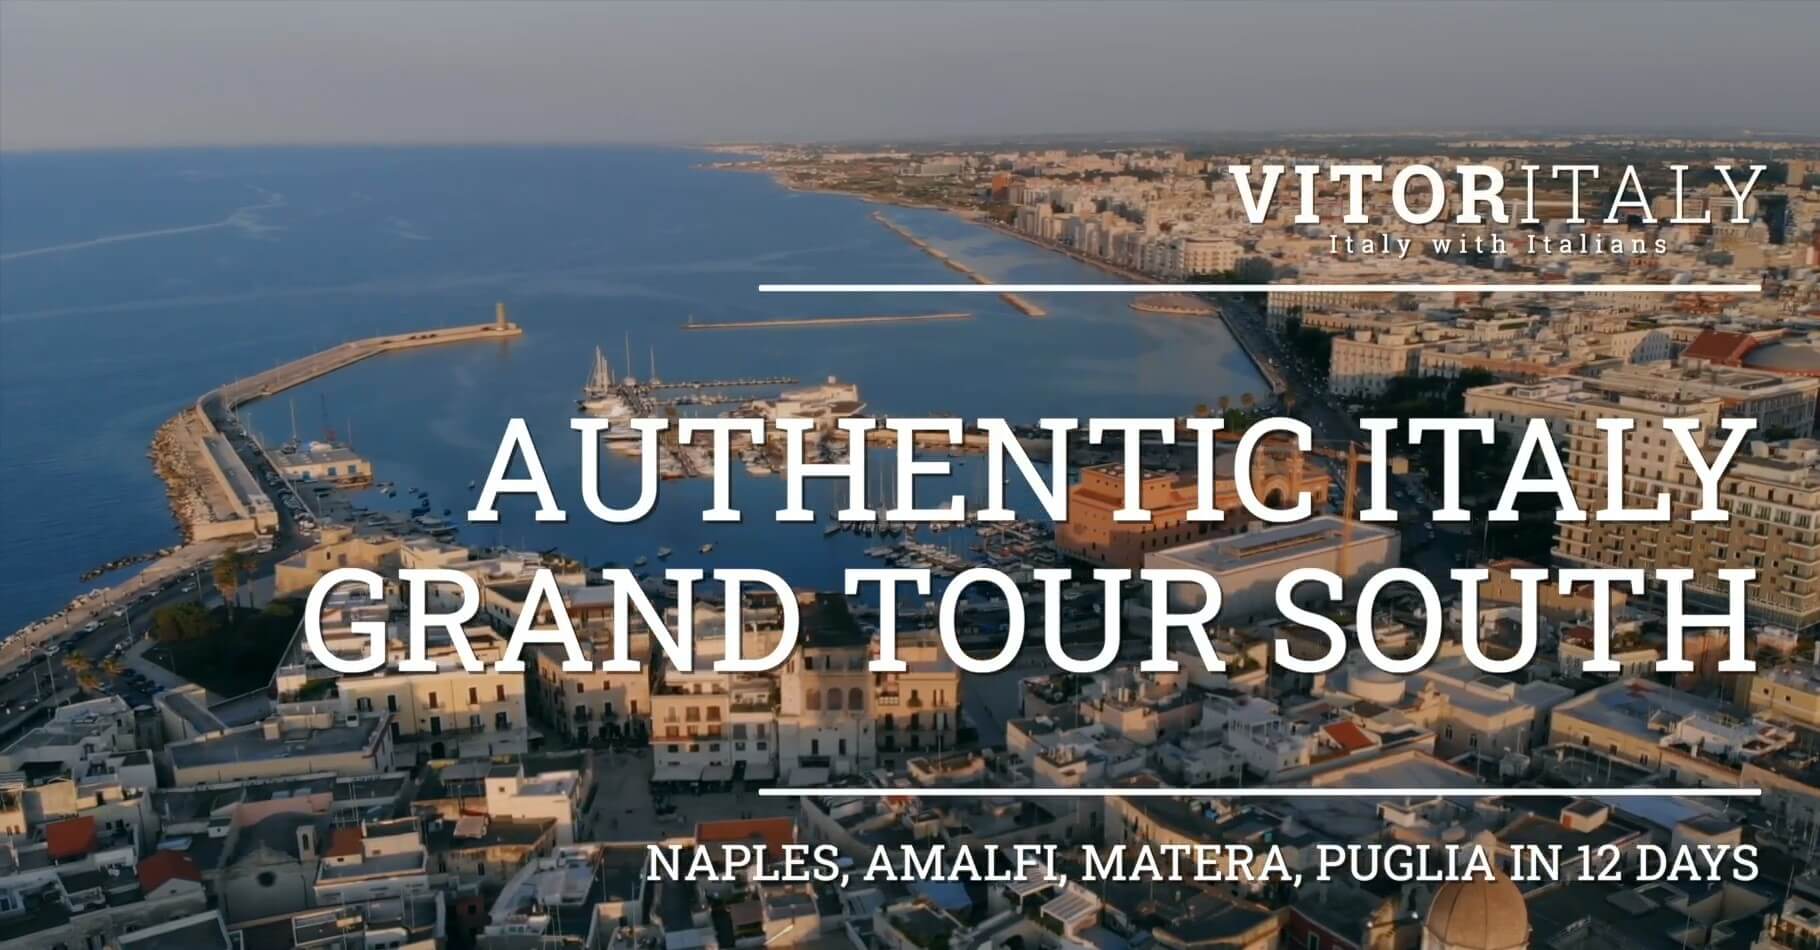 AUTHENTIC ITALY GRAND TOUR SOUTH - Naples, Amalfi, Matera, Puglia in 12 days